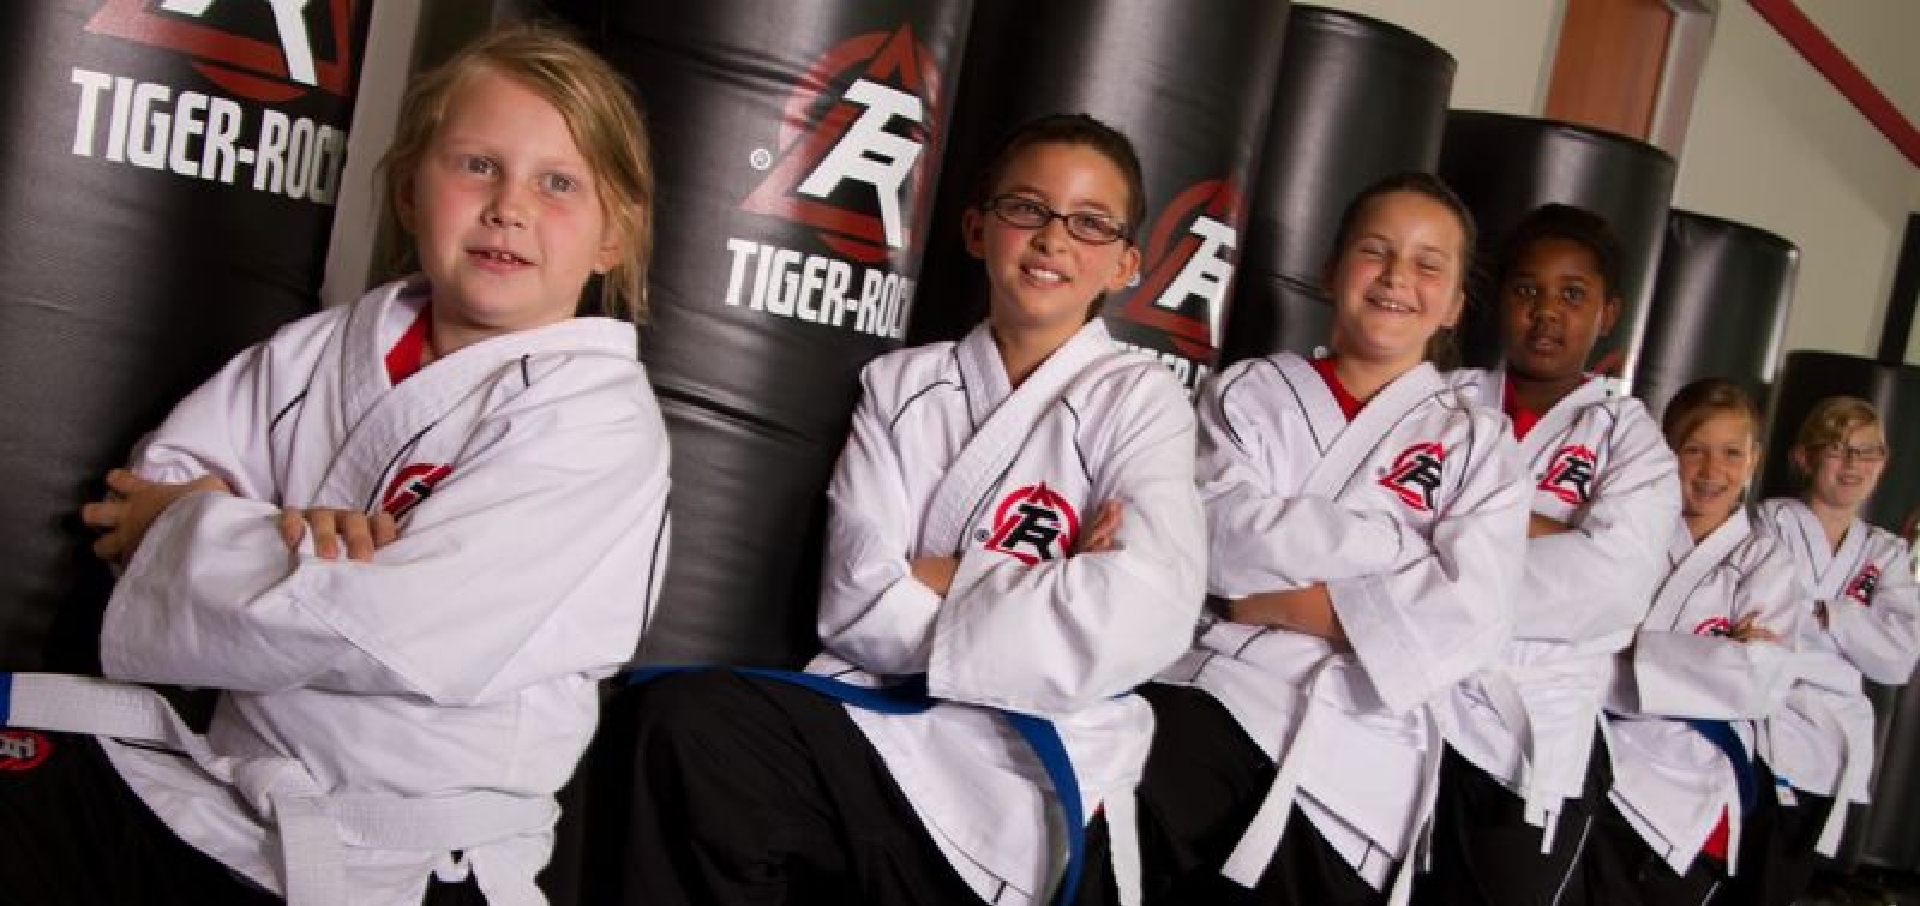 McKinney Martial Arts Academy For Juniors, Kids & Adults